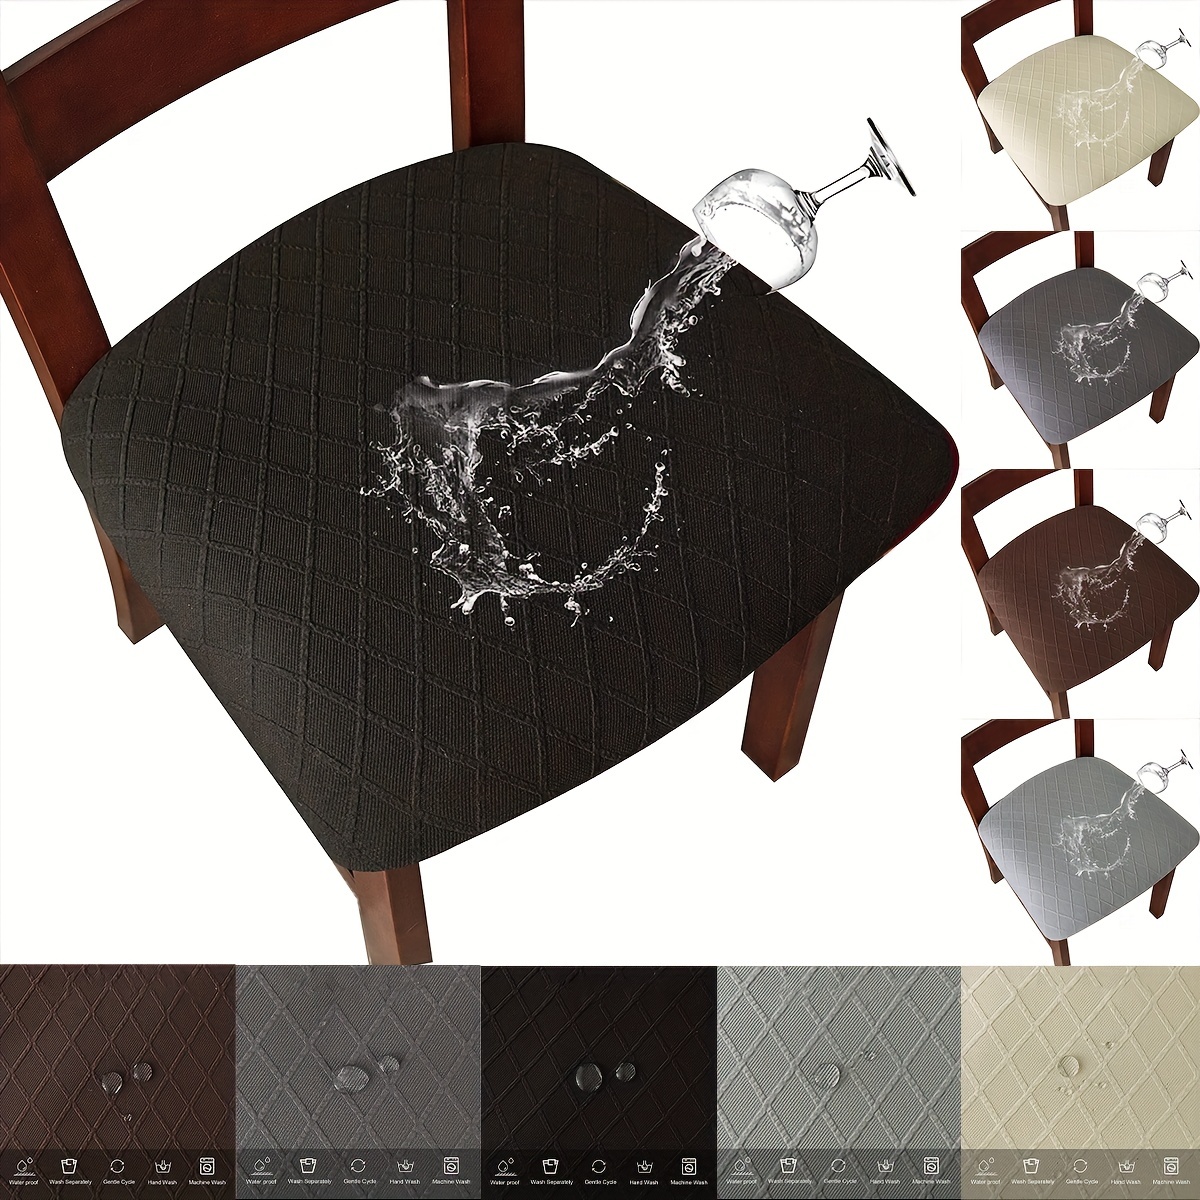 https://img.kwcdn.com/product/modern-minimalist-elastic-chair-cover/d69d2f15w98k18-a95dbae3/Fancyalgo/VirtualModelMatting/1d479de7945288b5aaae503e194469b2.jpg?imageView2/2/w/500/q/60/format/webp